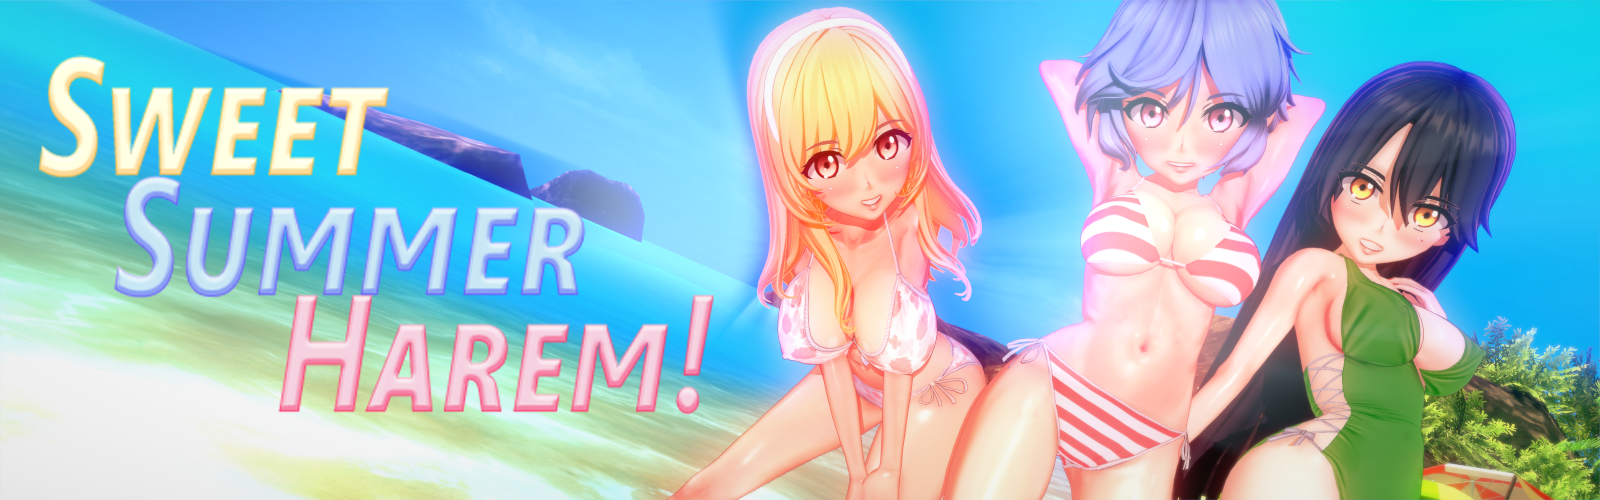 Sweet Summer Harem! poster